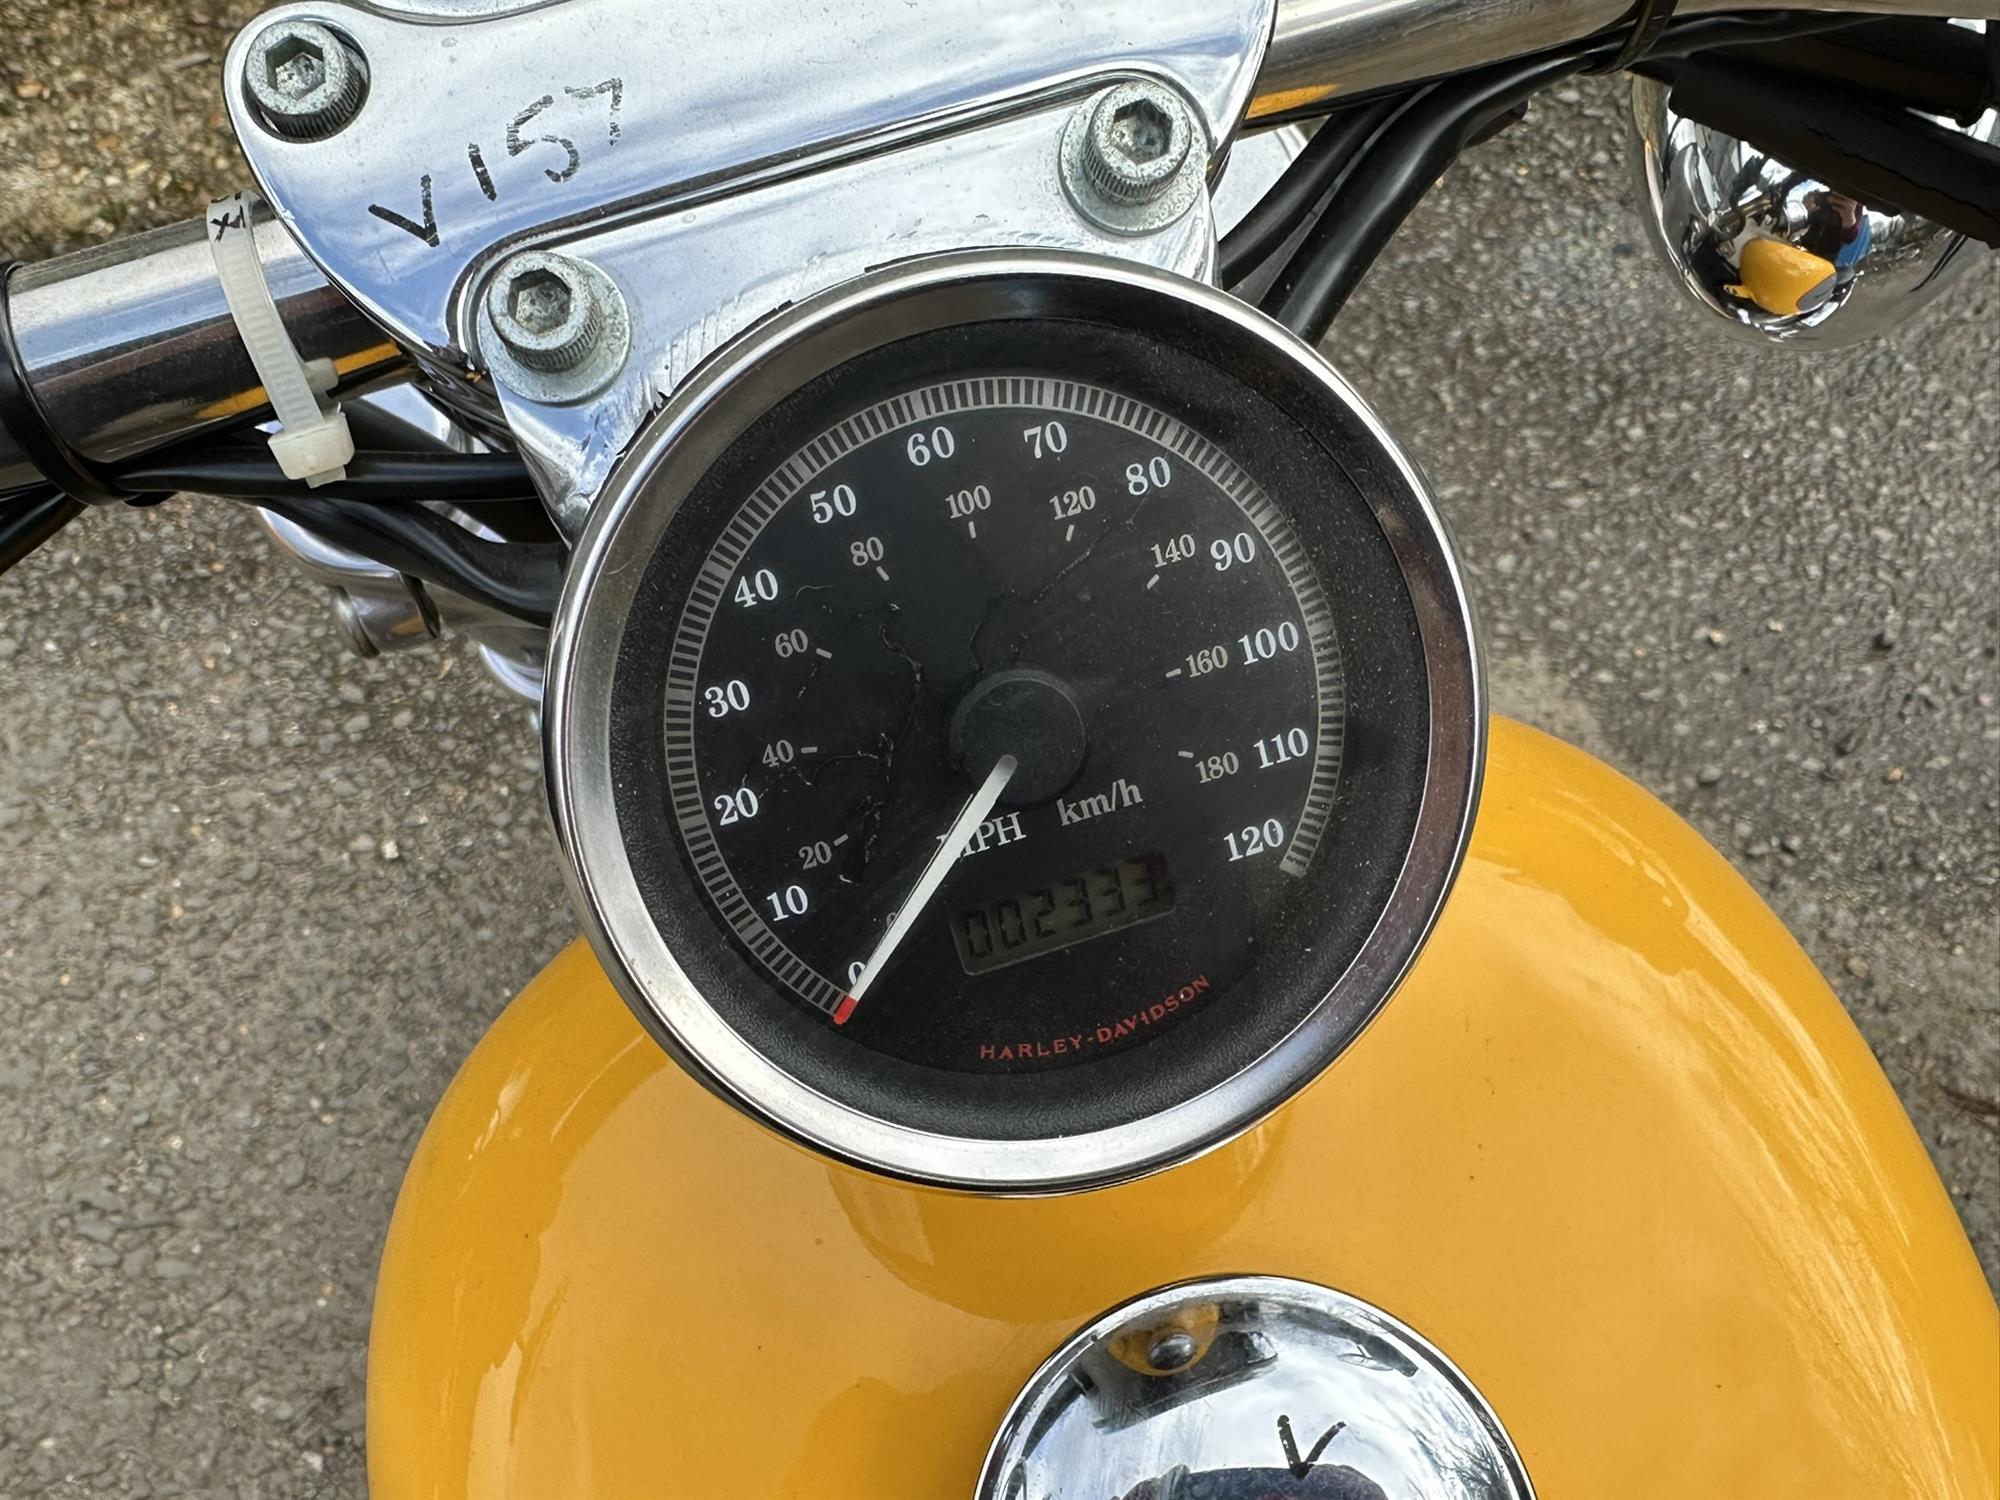 2000 Harley Davidson XL883c Sportster 883cc - Image 5 of 7